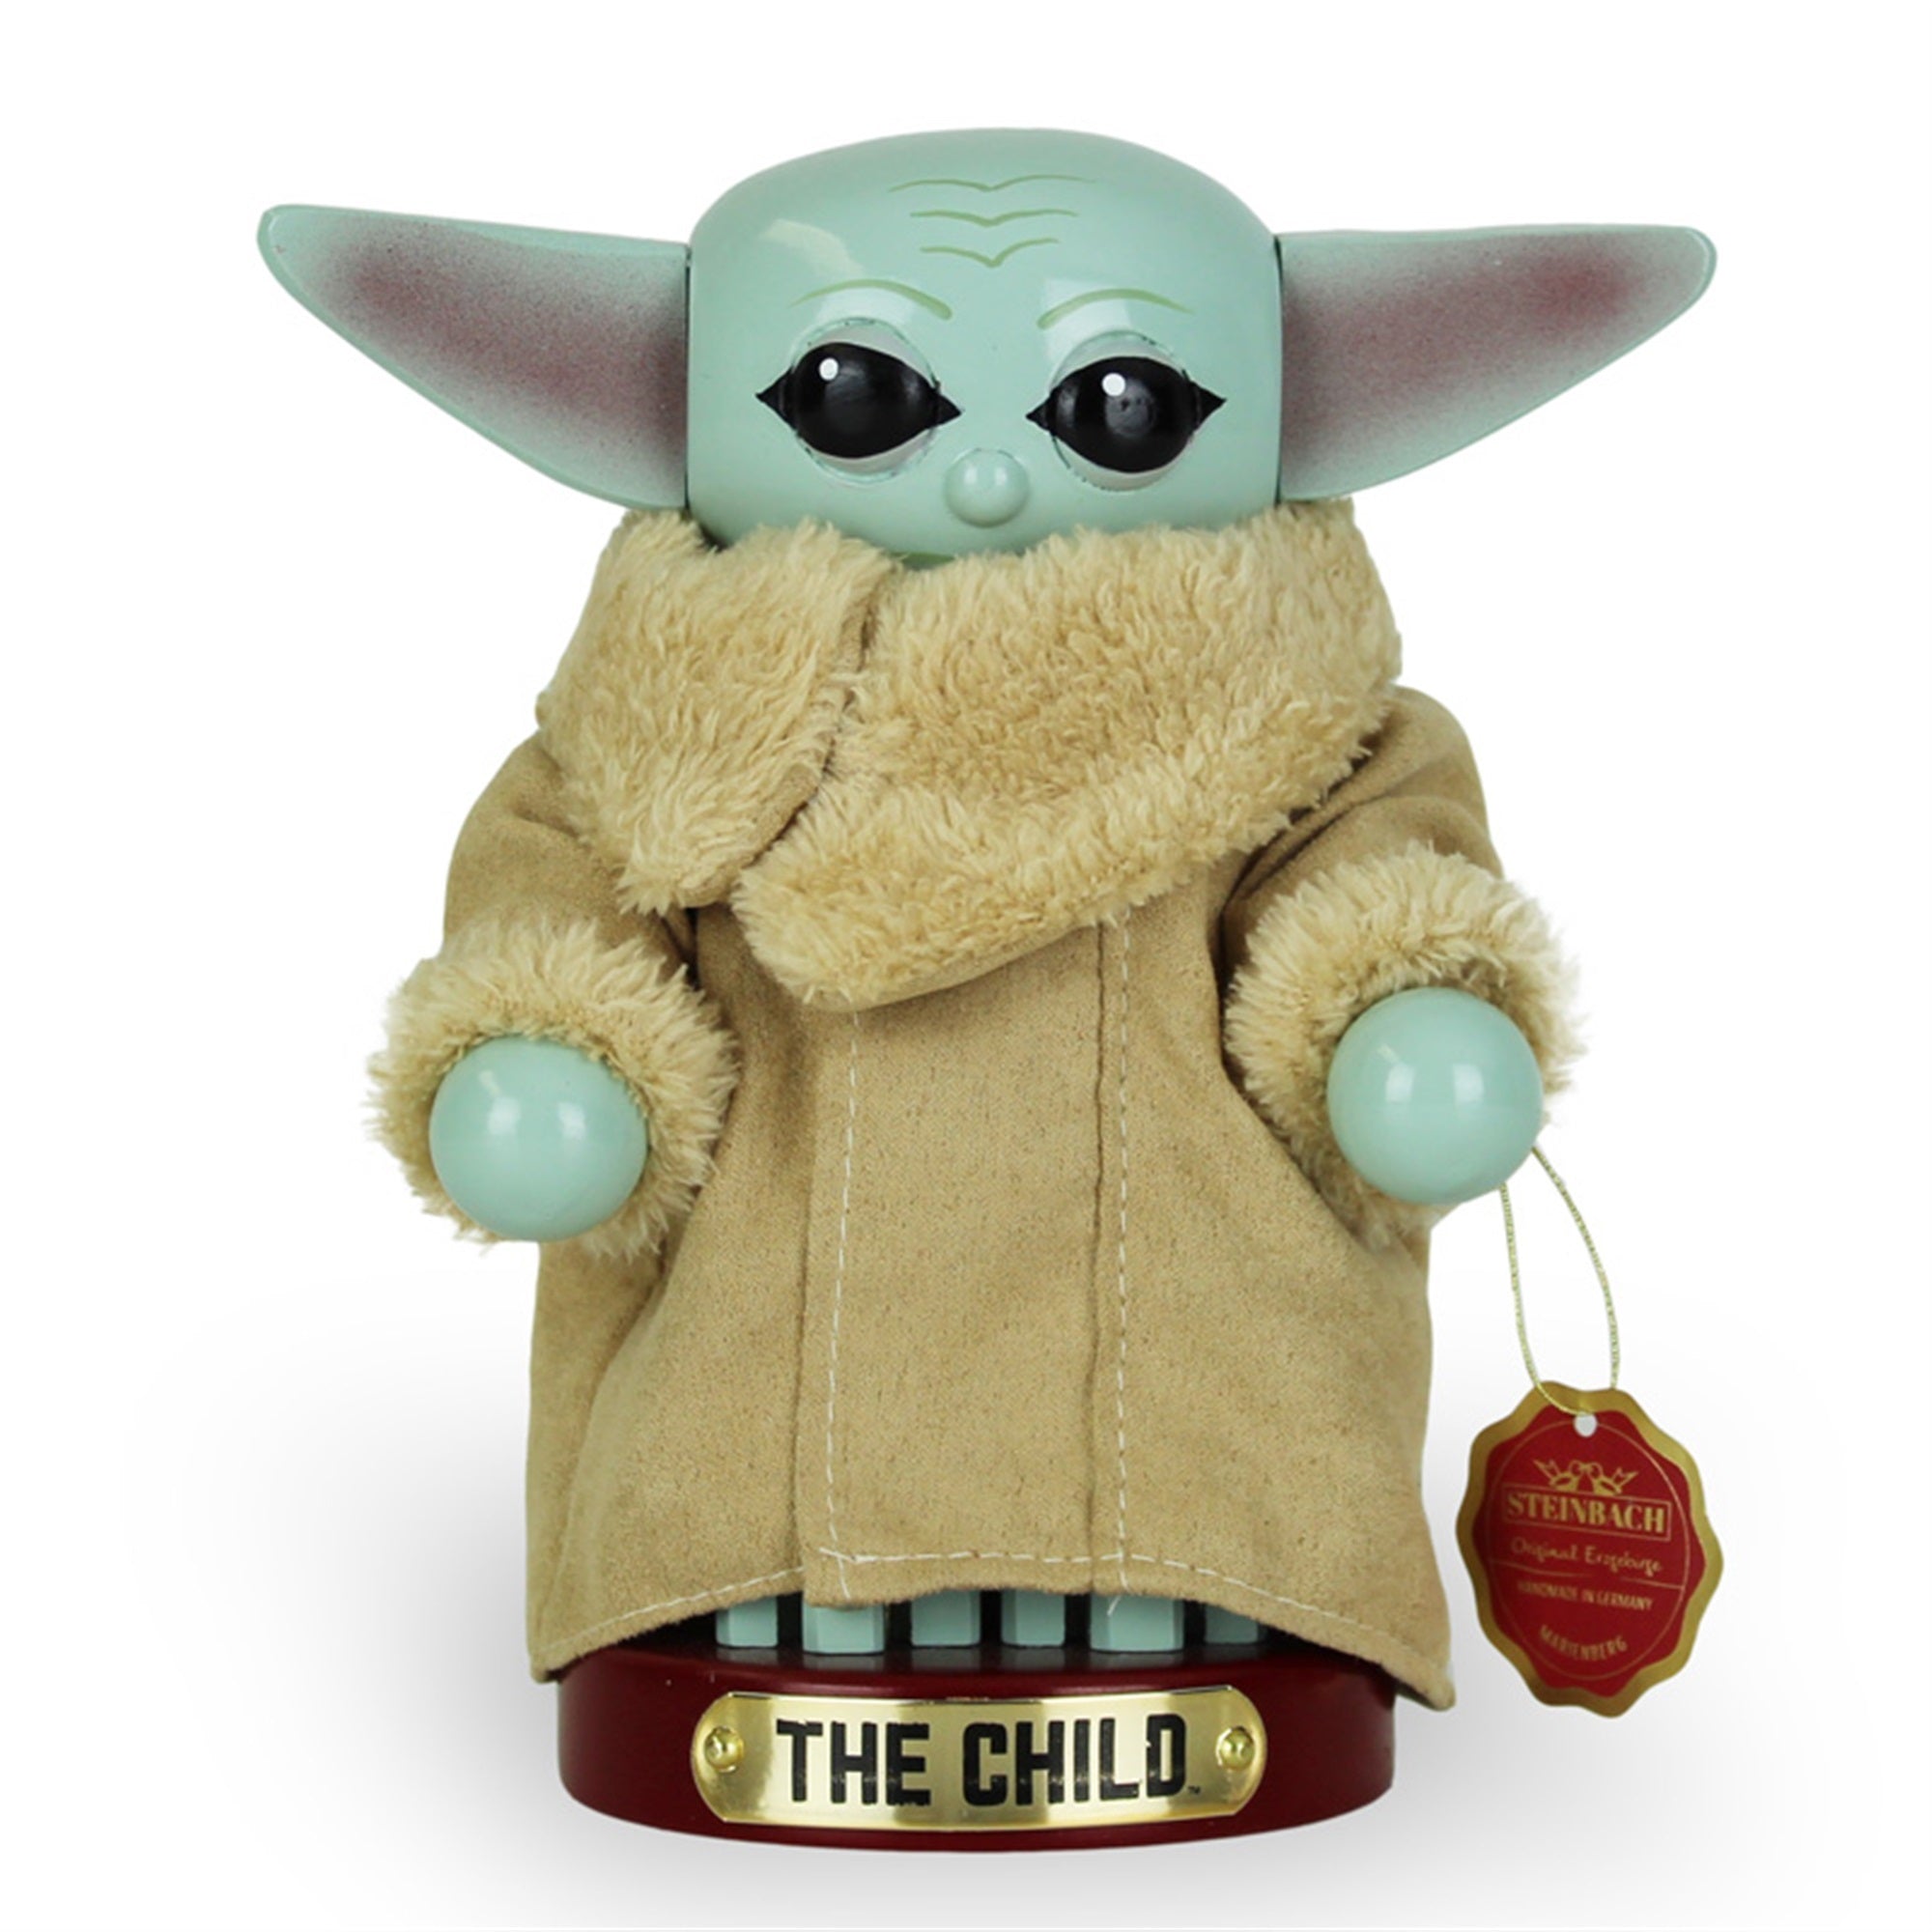 Kurt Adler Steinbach Star Wars Yoda The Child Nutcracker, 8"